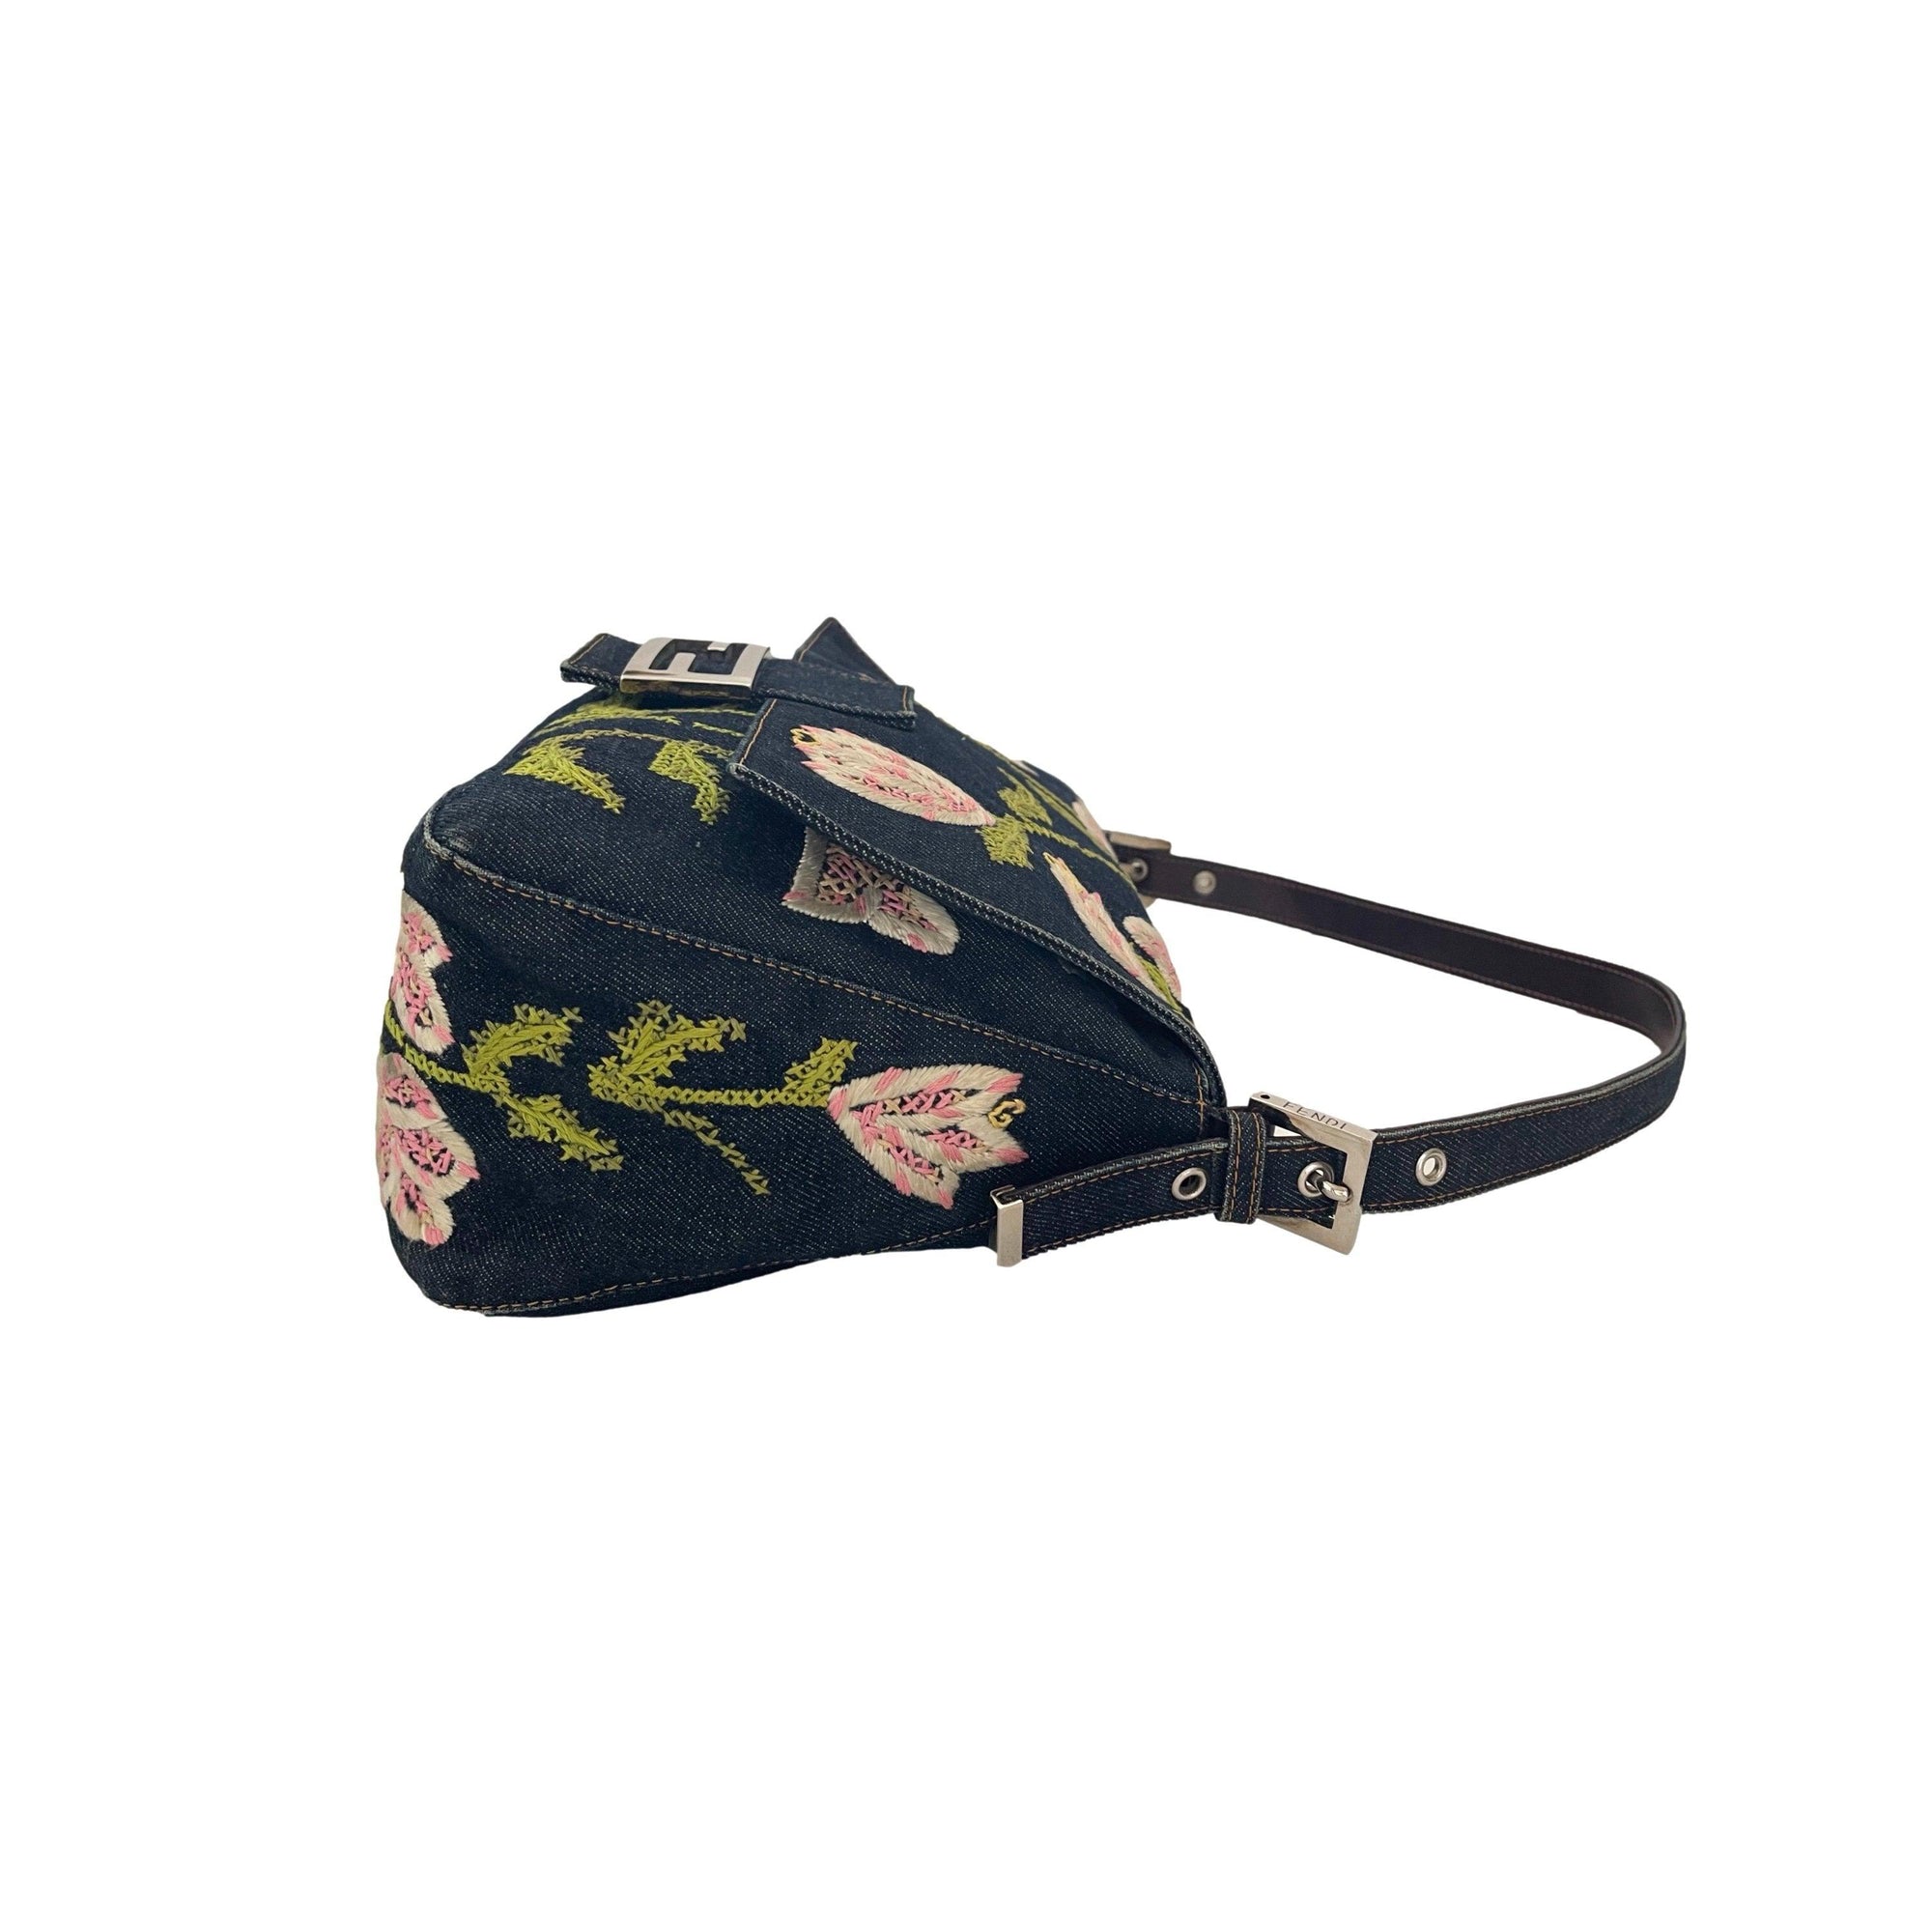 Fendi Floral Denim Shoulder Bag - Handbags